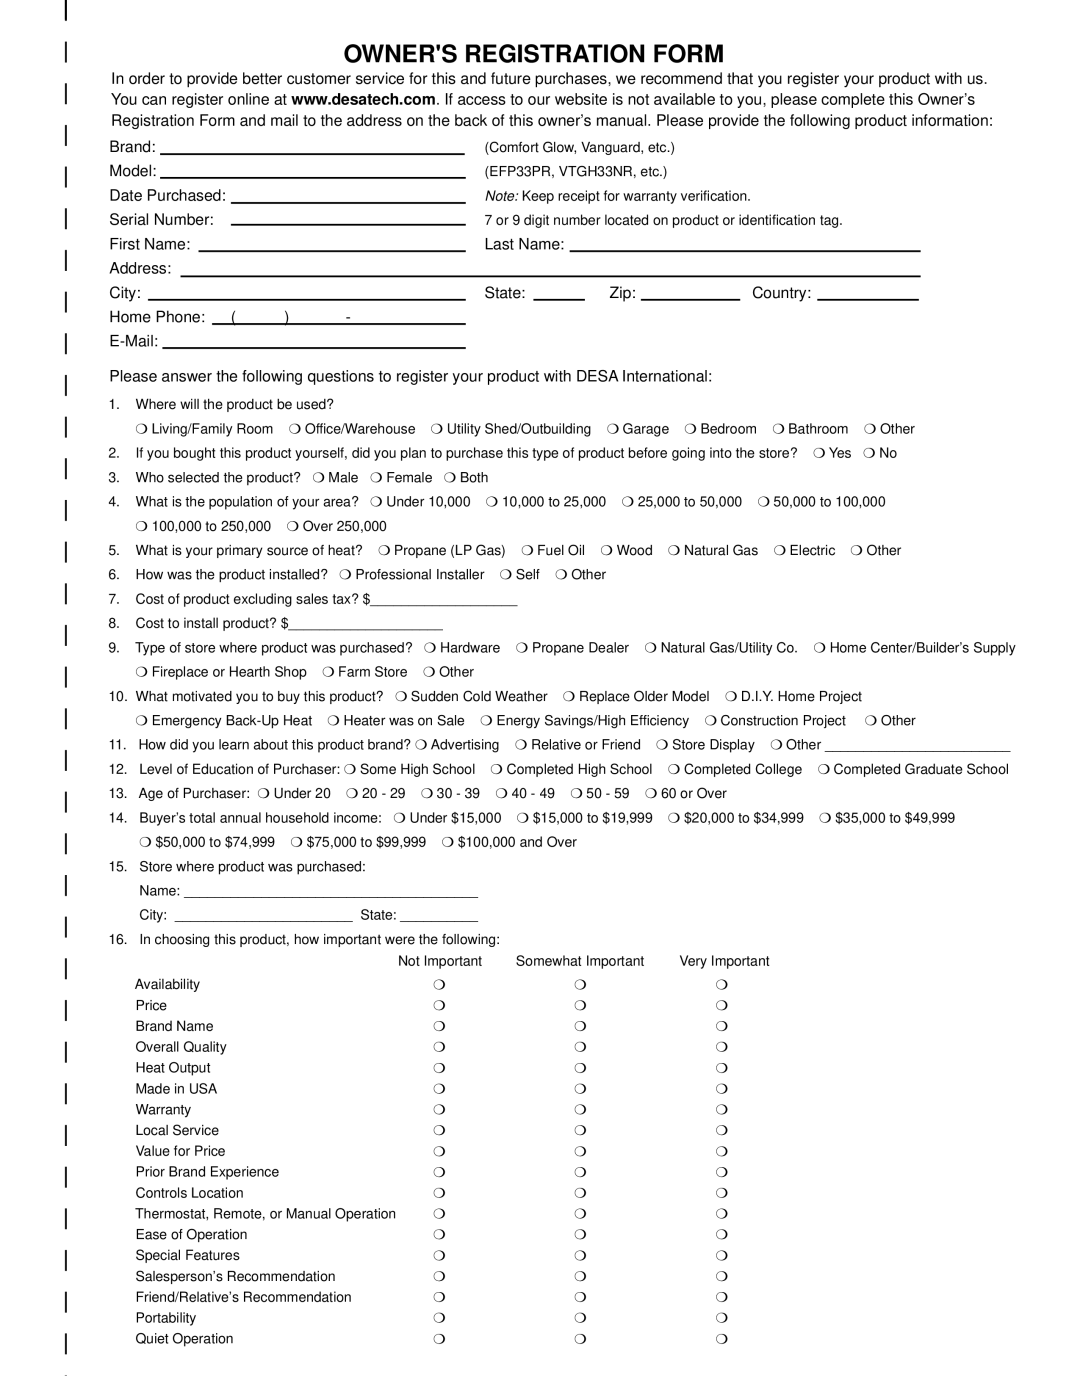 Desa VSGF33PR, EFS33NR installation manual Owners Registration Form 